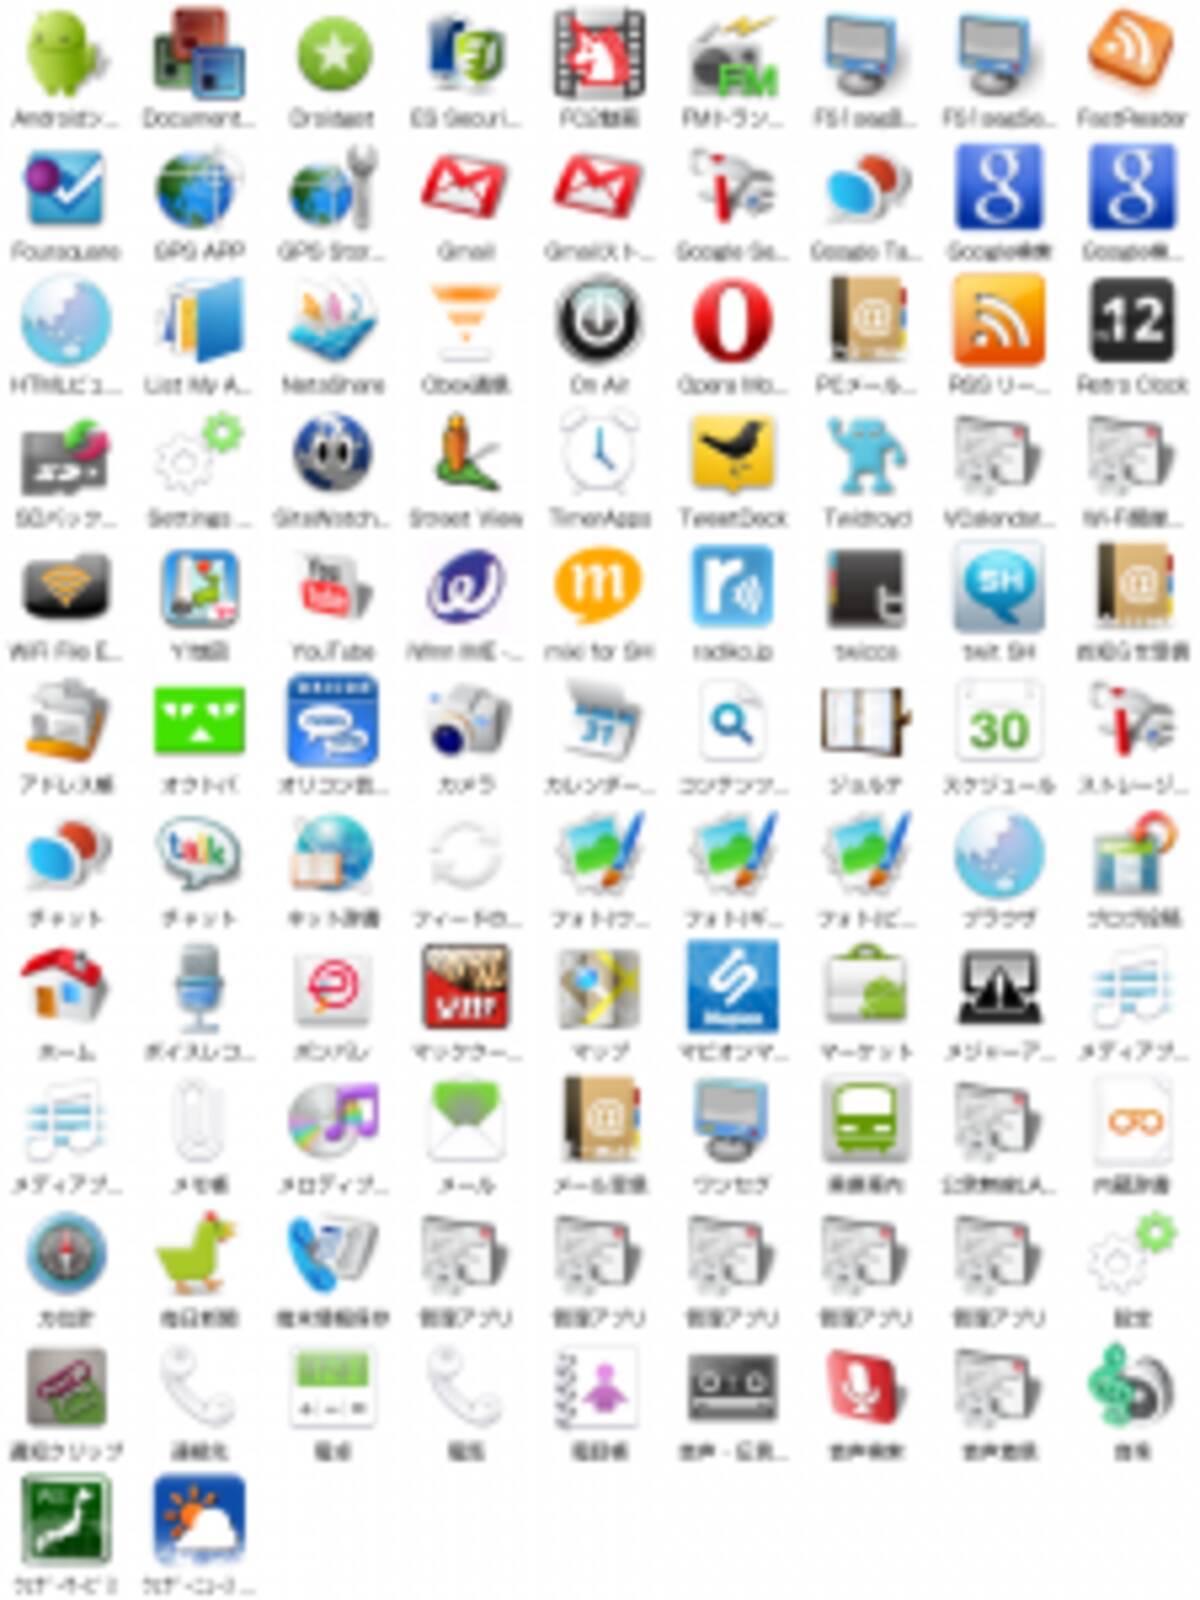 List My Apps 作ってみると楽しい アプリのアイコン一覧画像を作成 Androidアプリ1430 2011年2月18日 エキサイトニュース